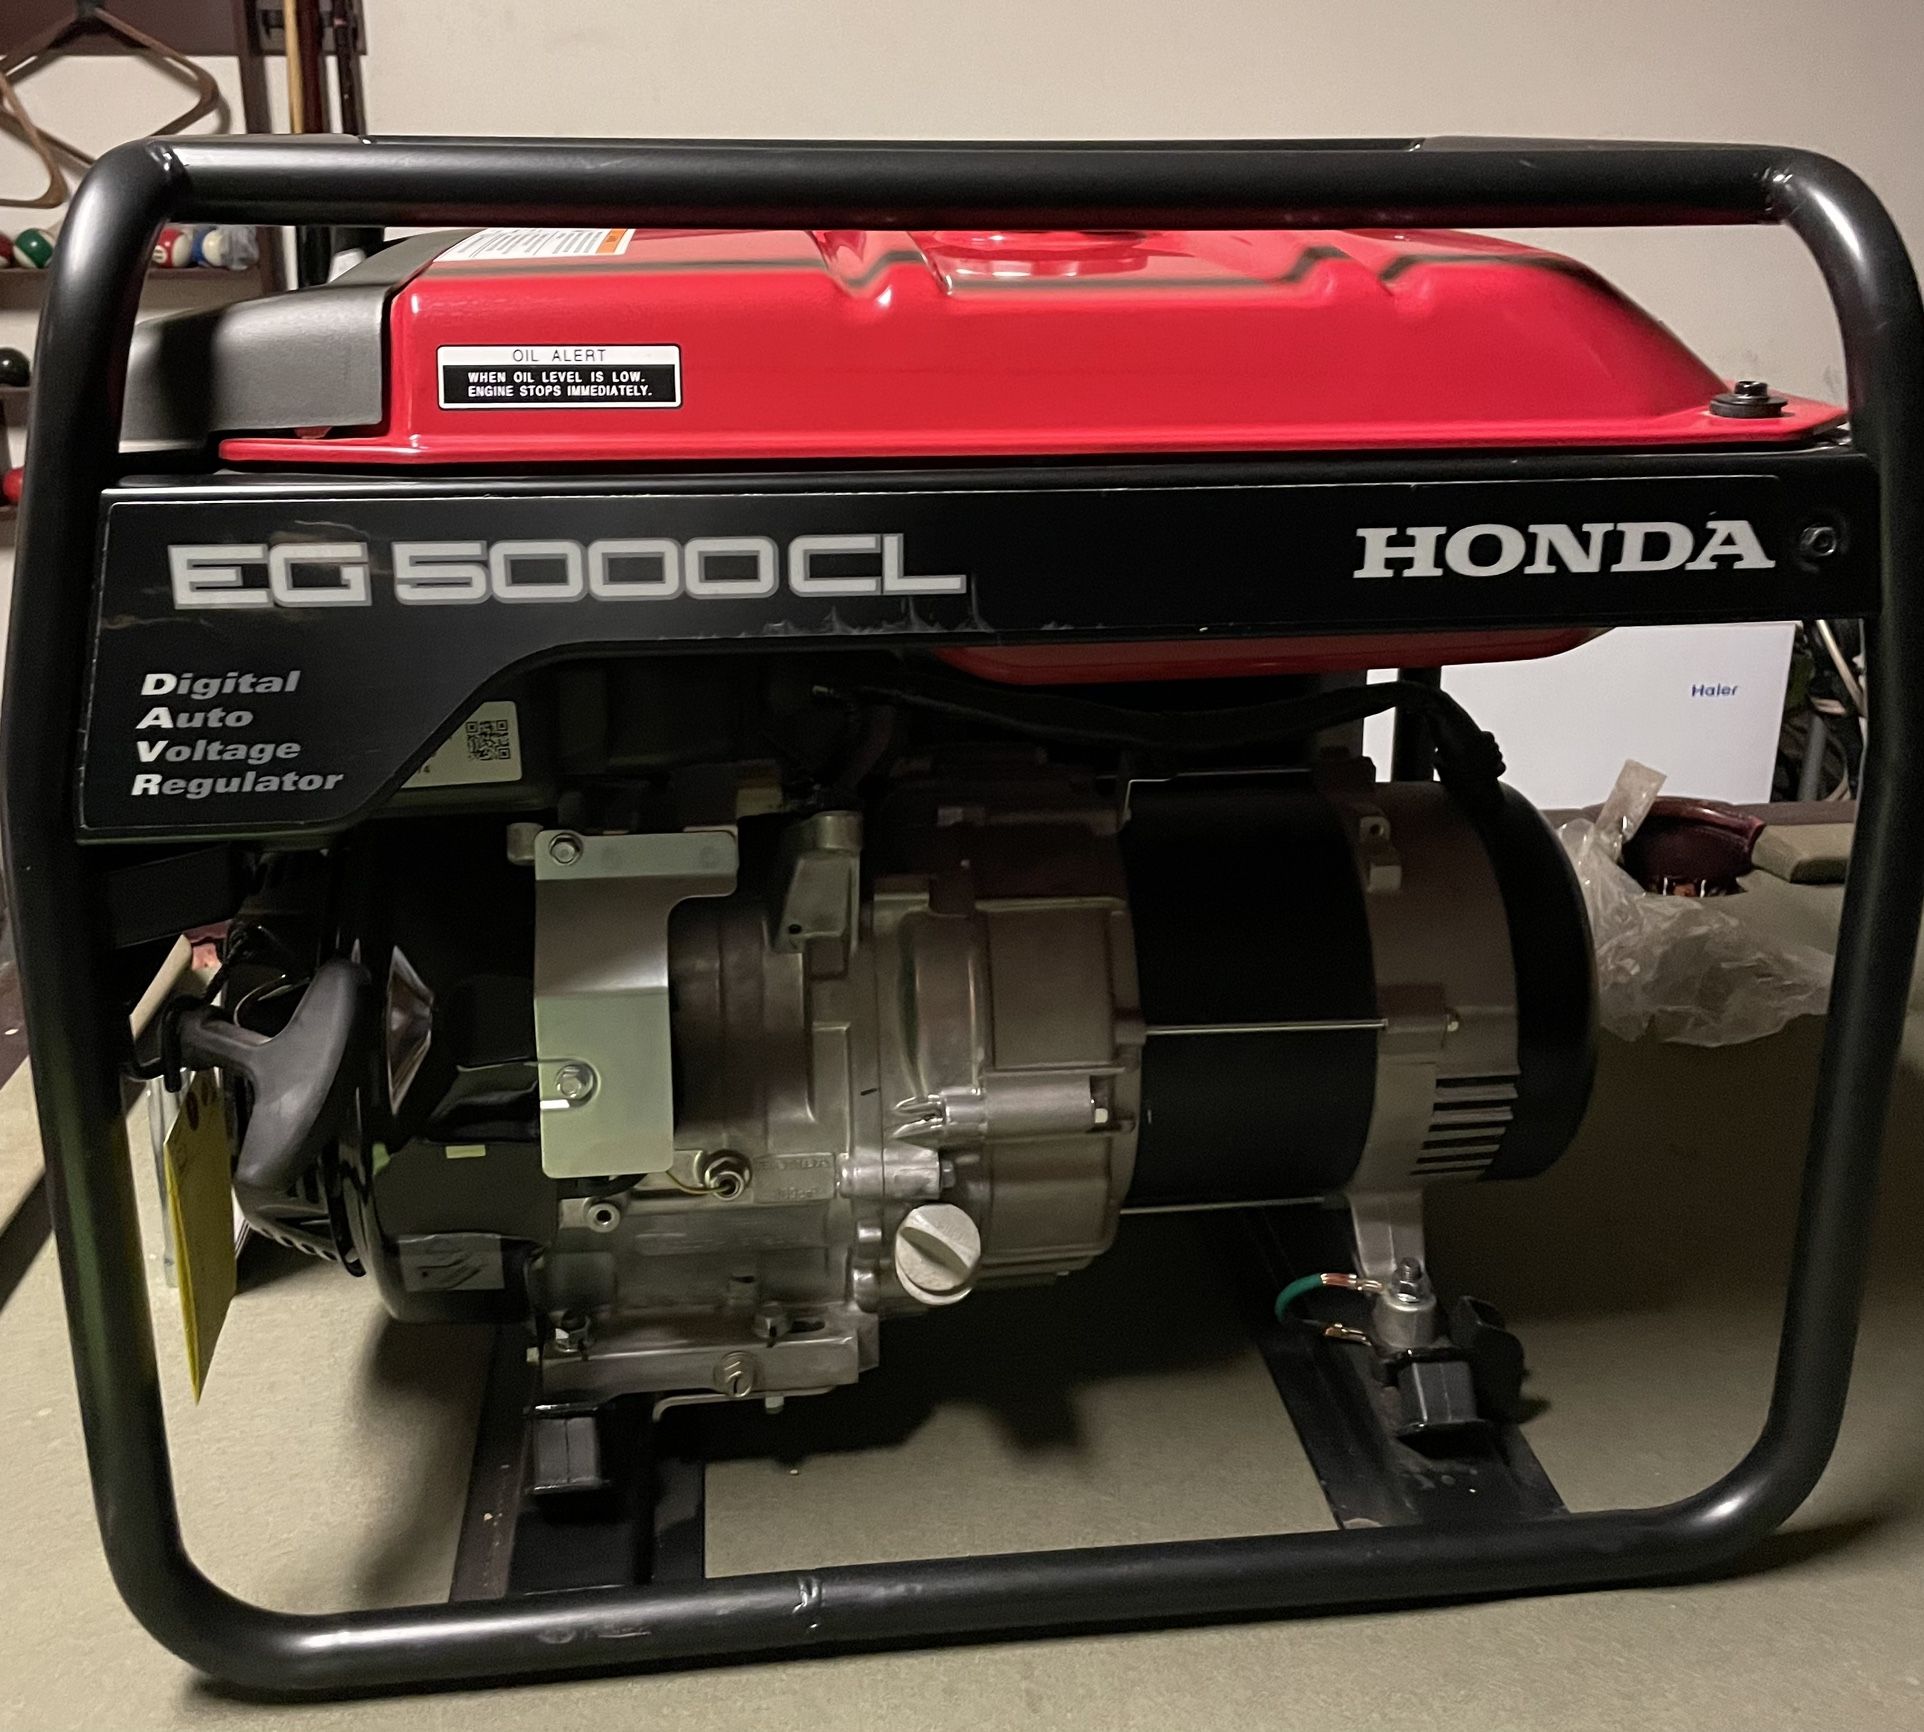 Honda Generator EG5000CL